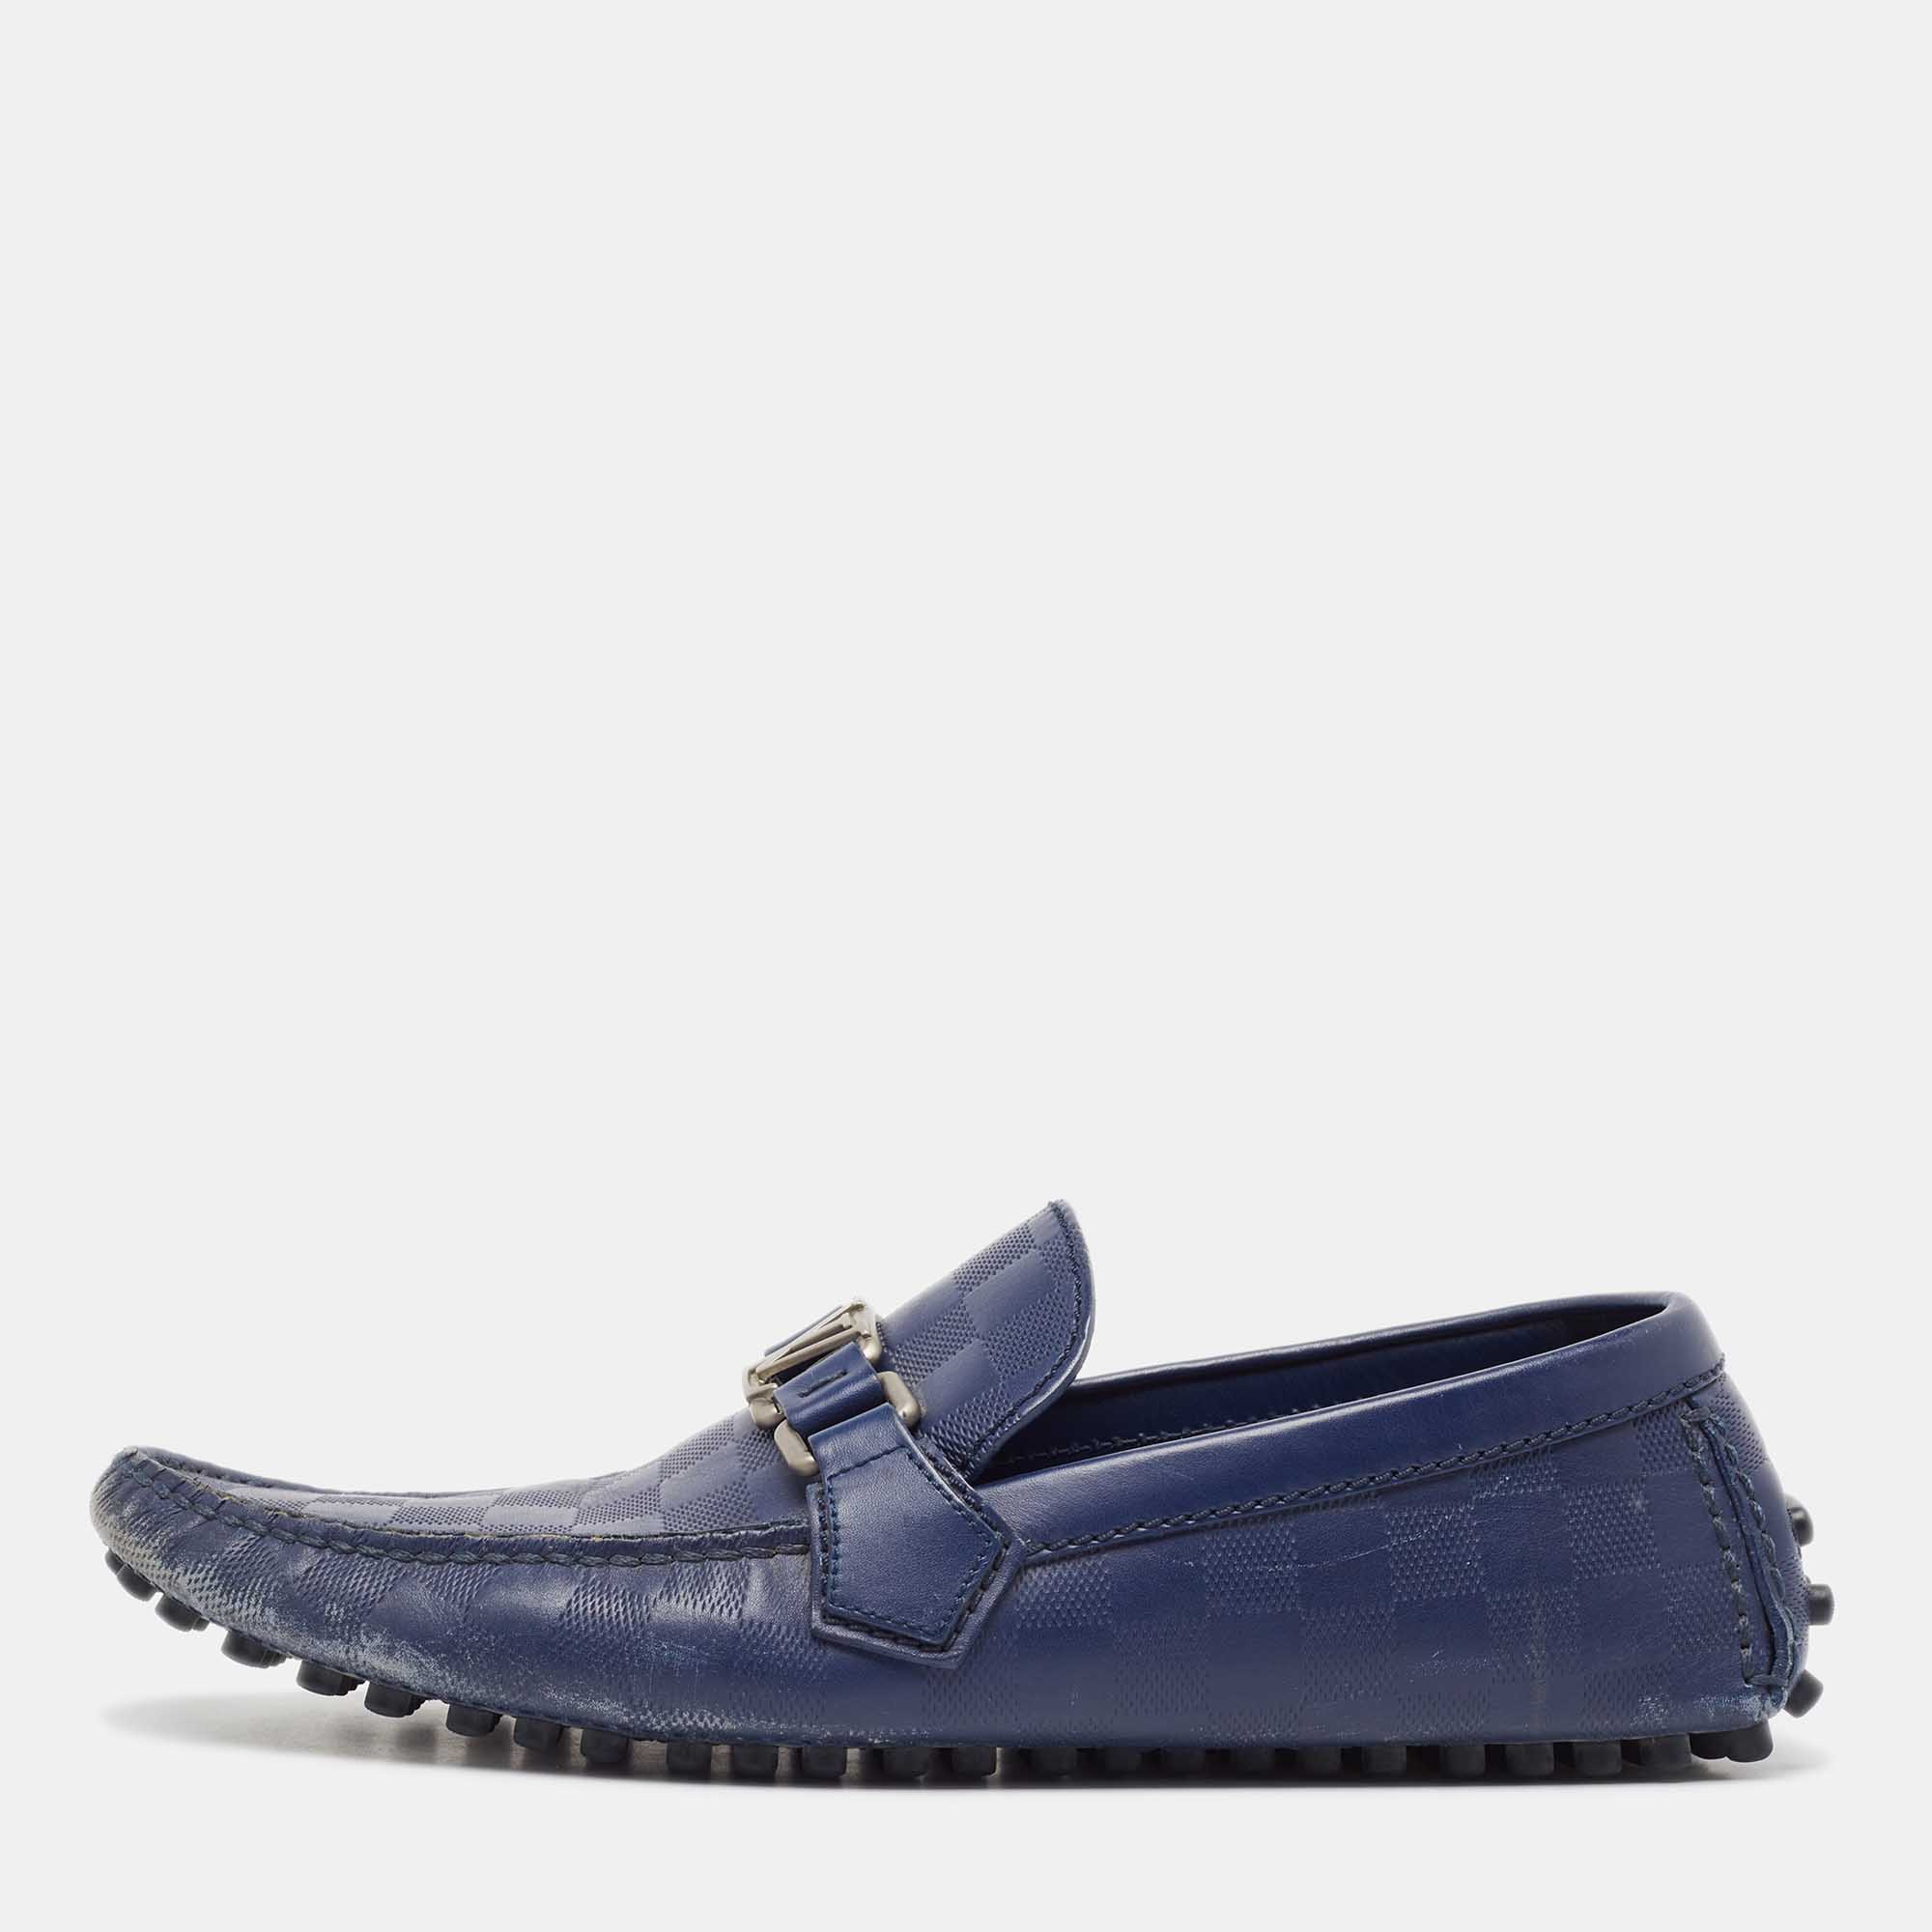 Louis vuitton blue damier infini leather hockenheim loafers size 41.5